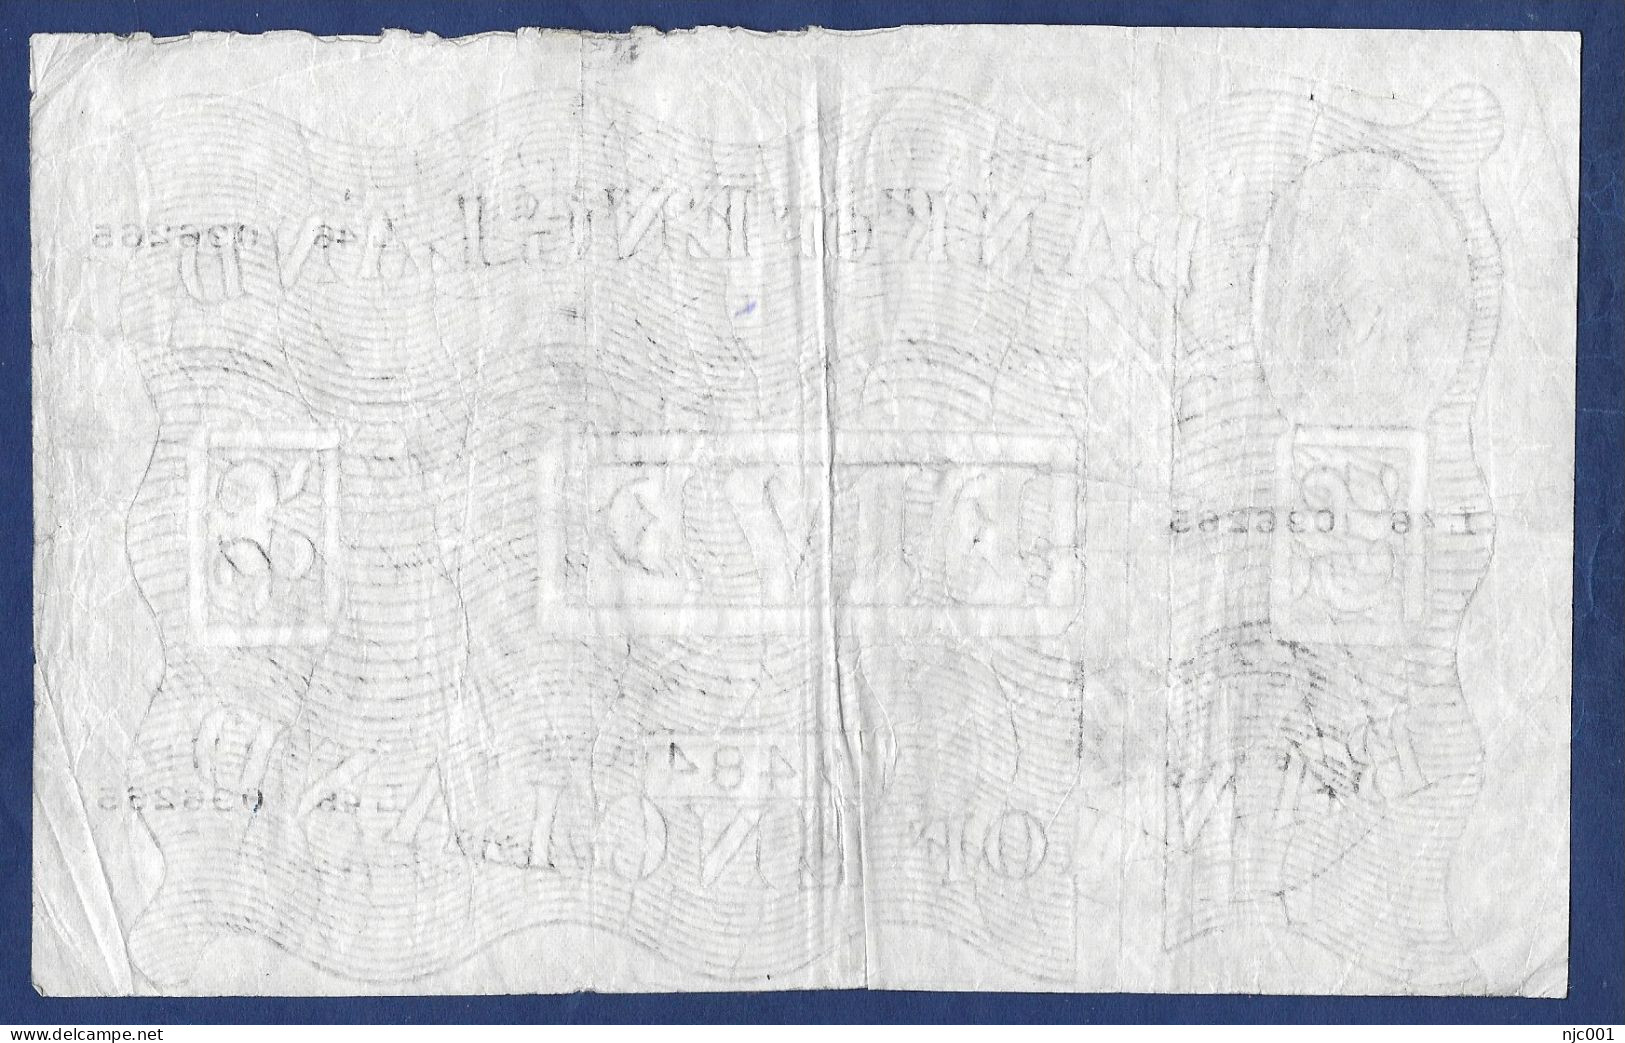 Peppiatt Genuine White 5 Pounds Banknote 1947 - 5 Pond